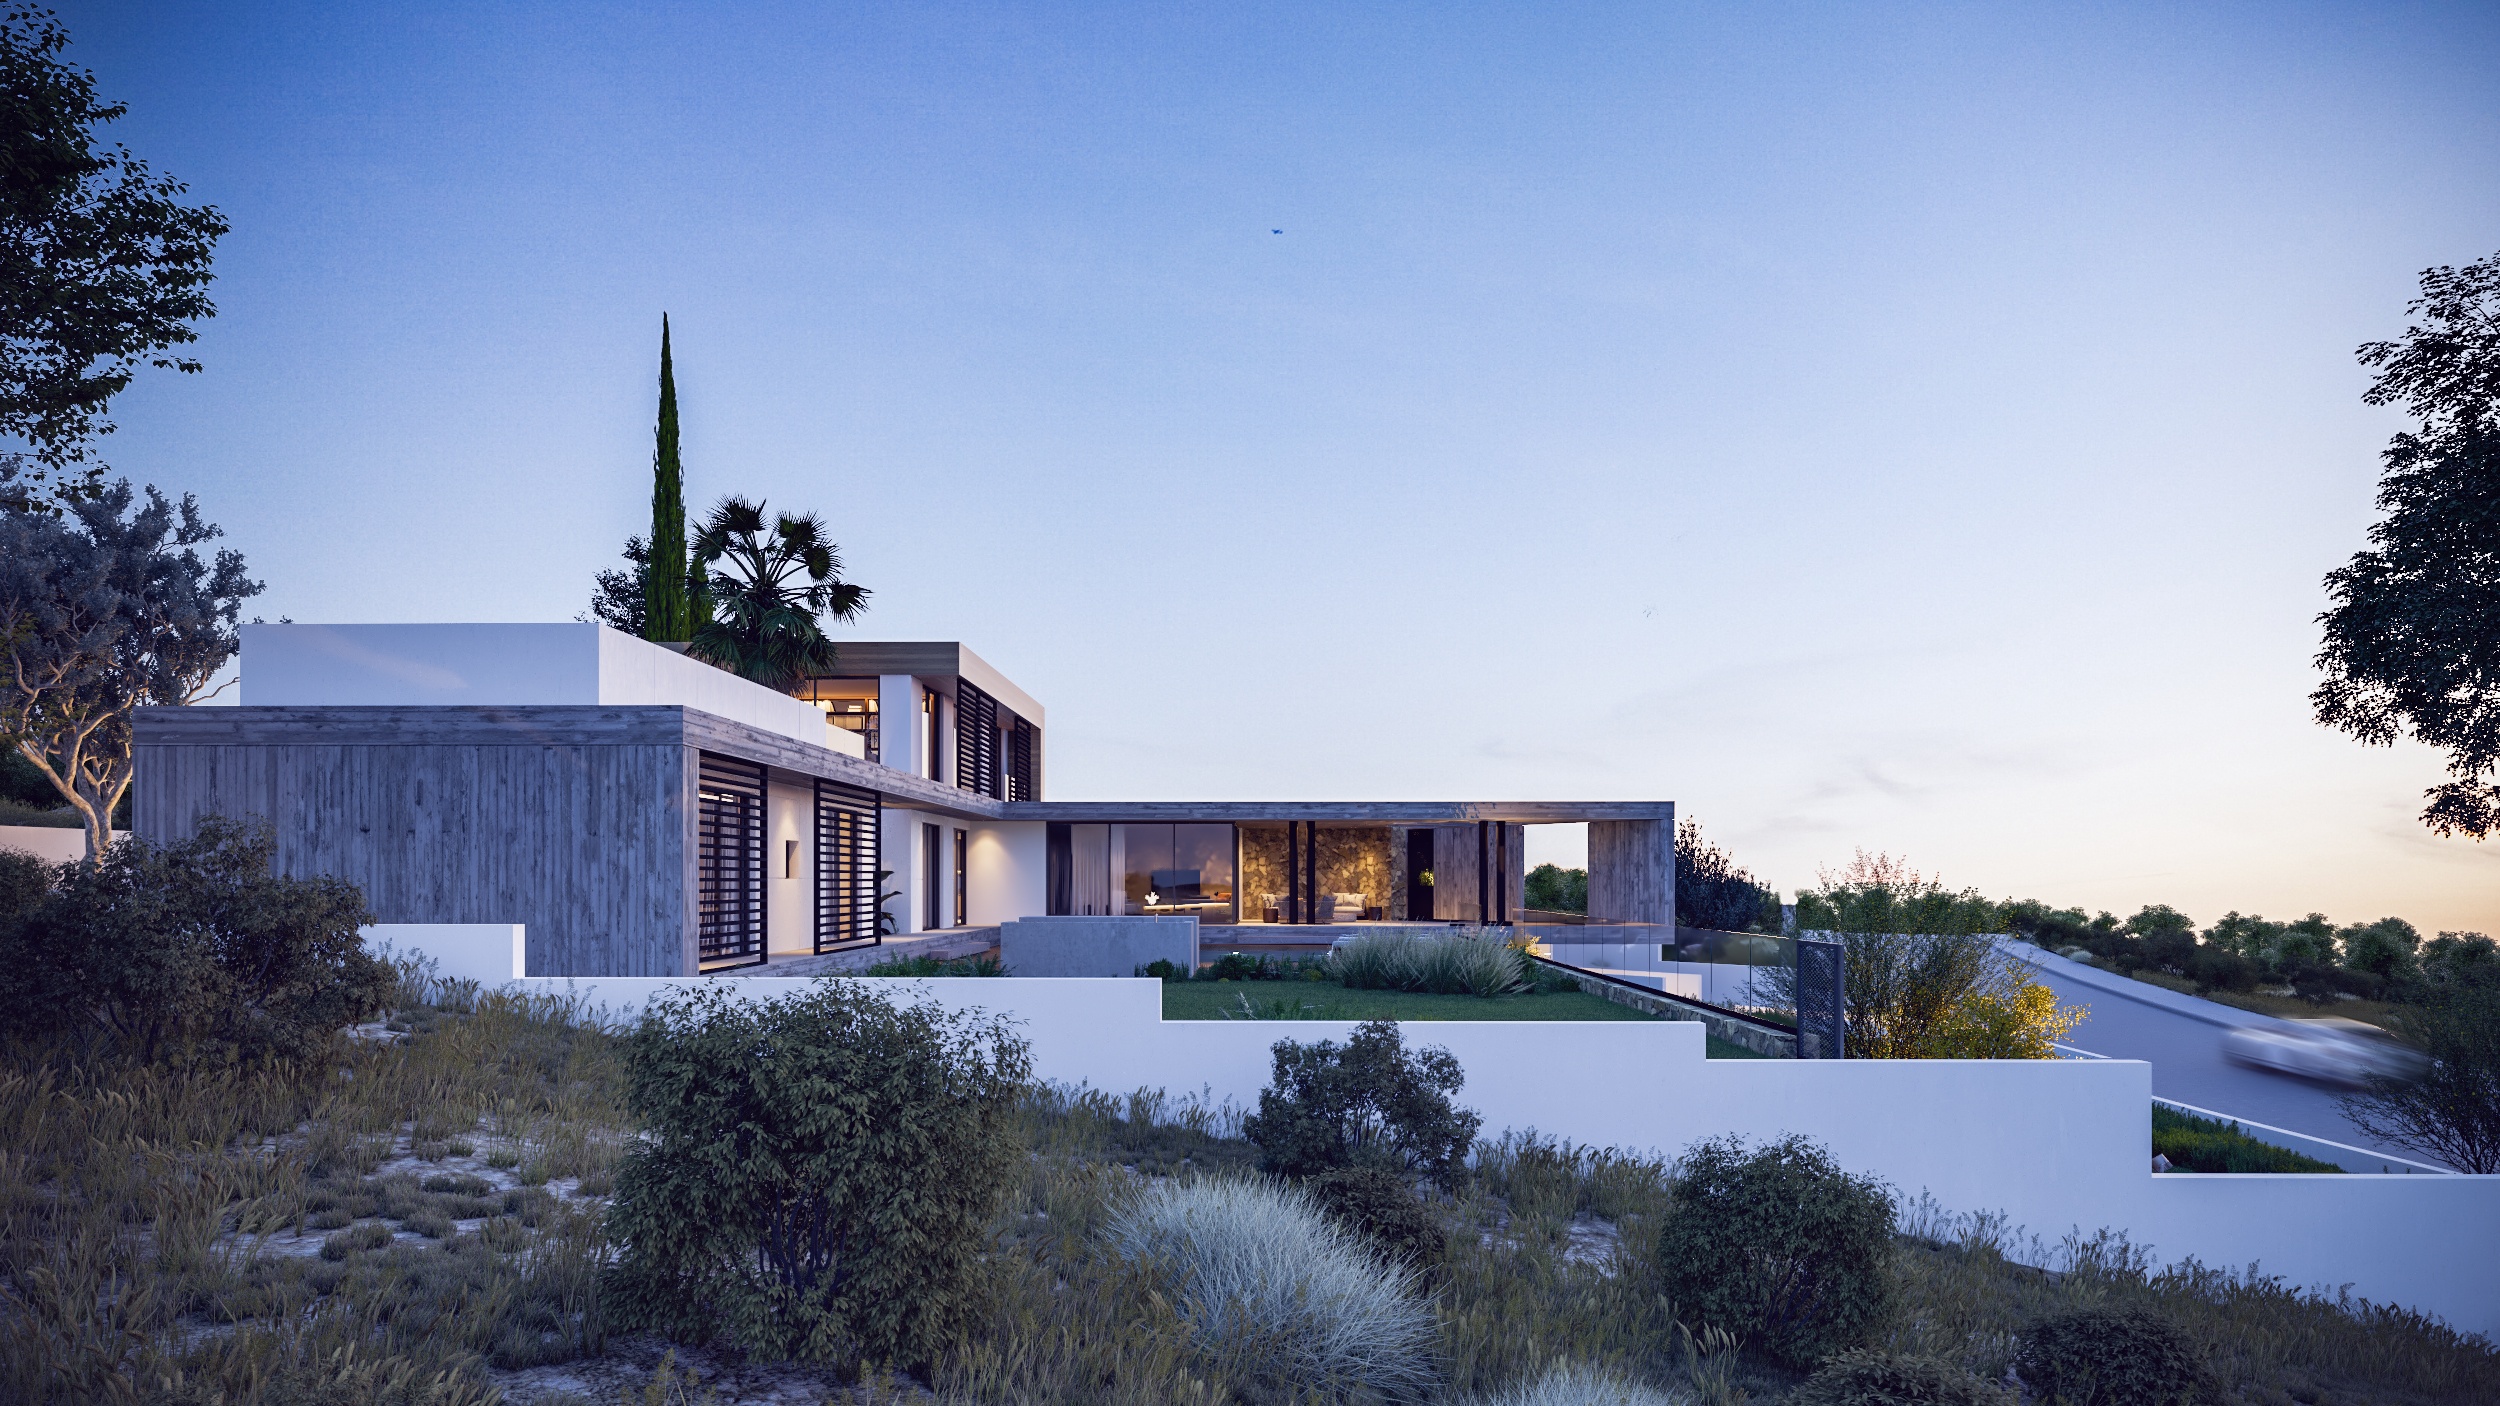 A + A House - Marinos Marinou Architects